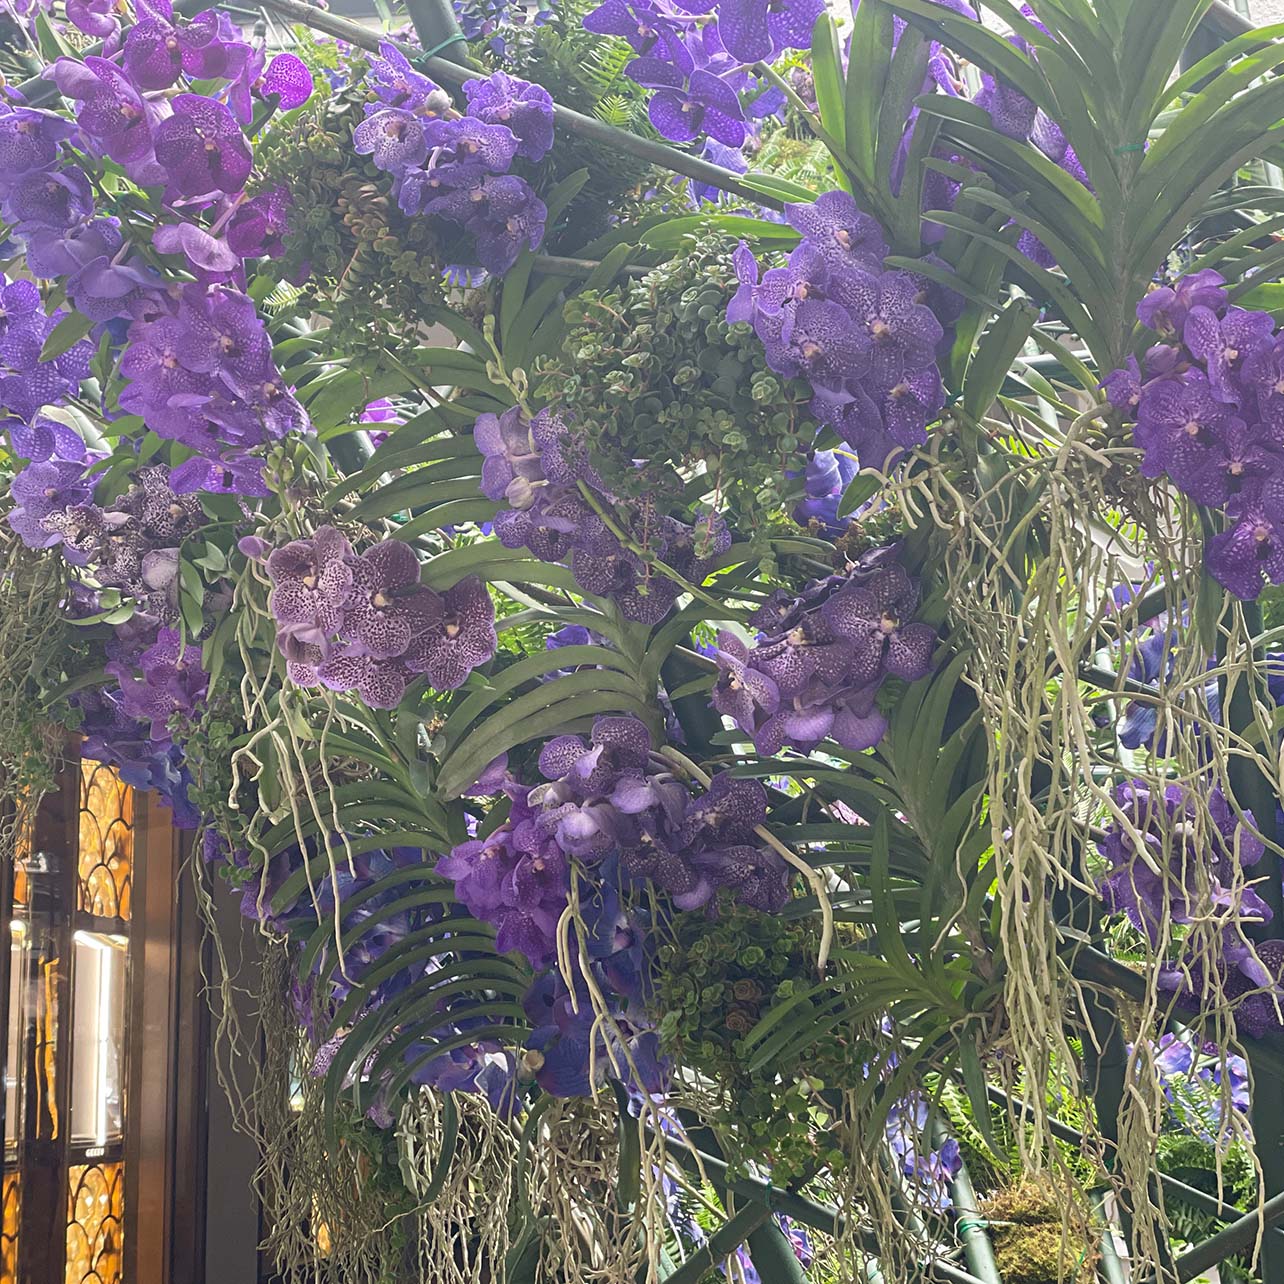 Purple Vanda orchids